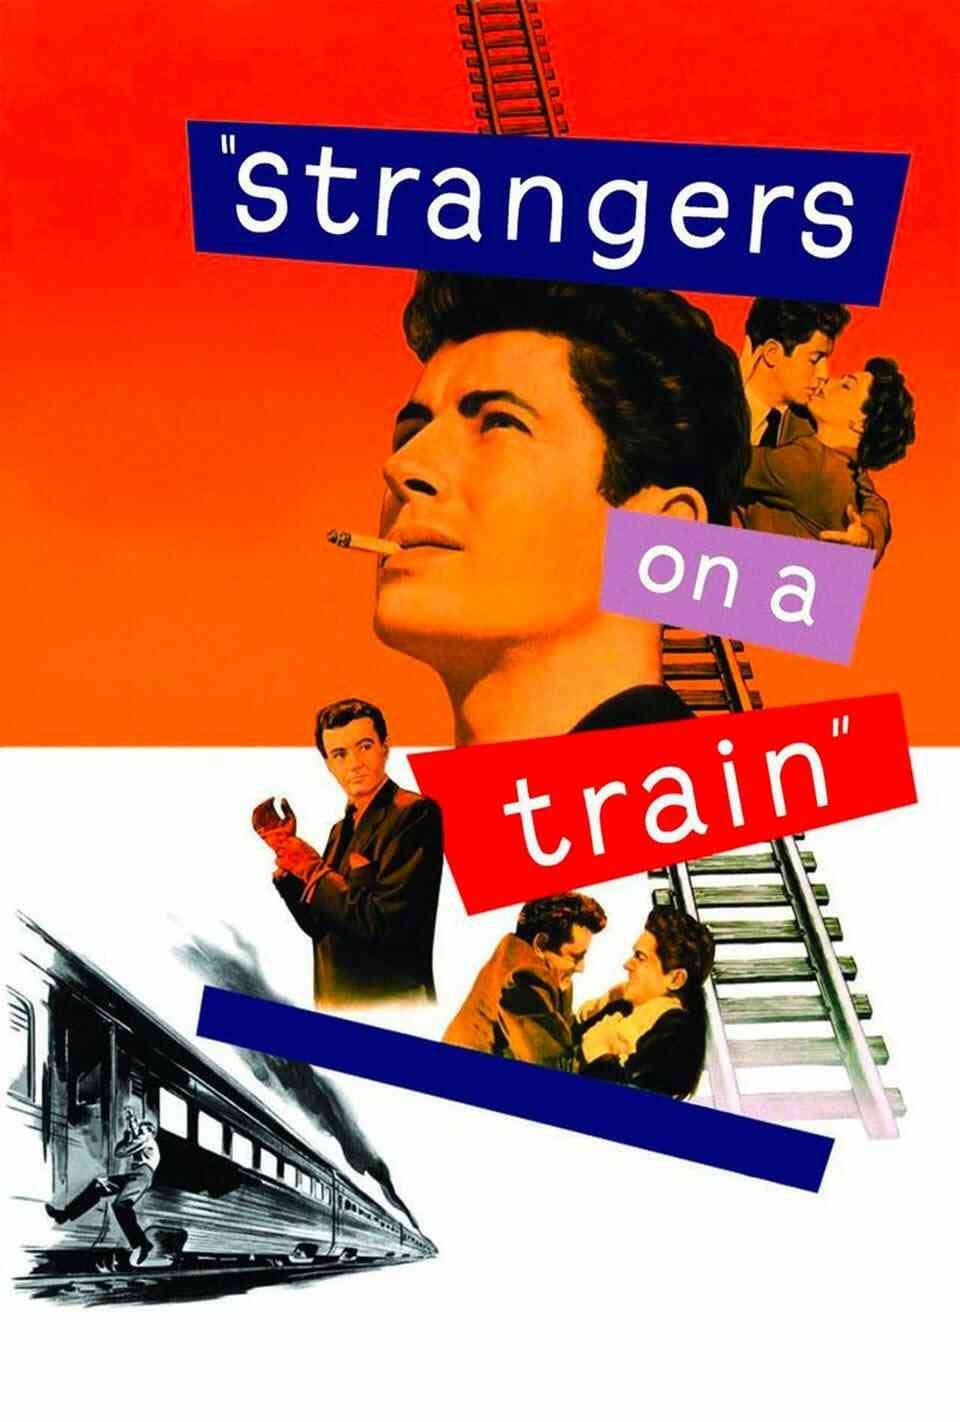 Read Strangers on a Train screenplay.